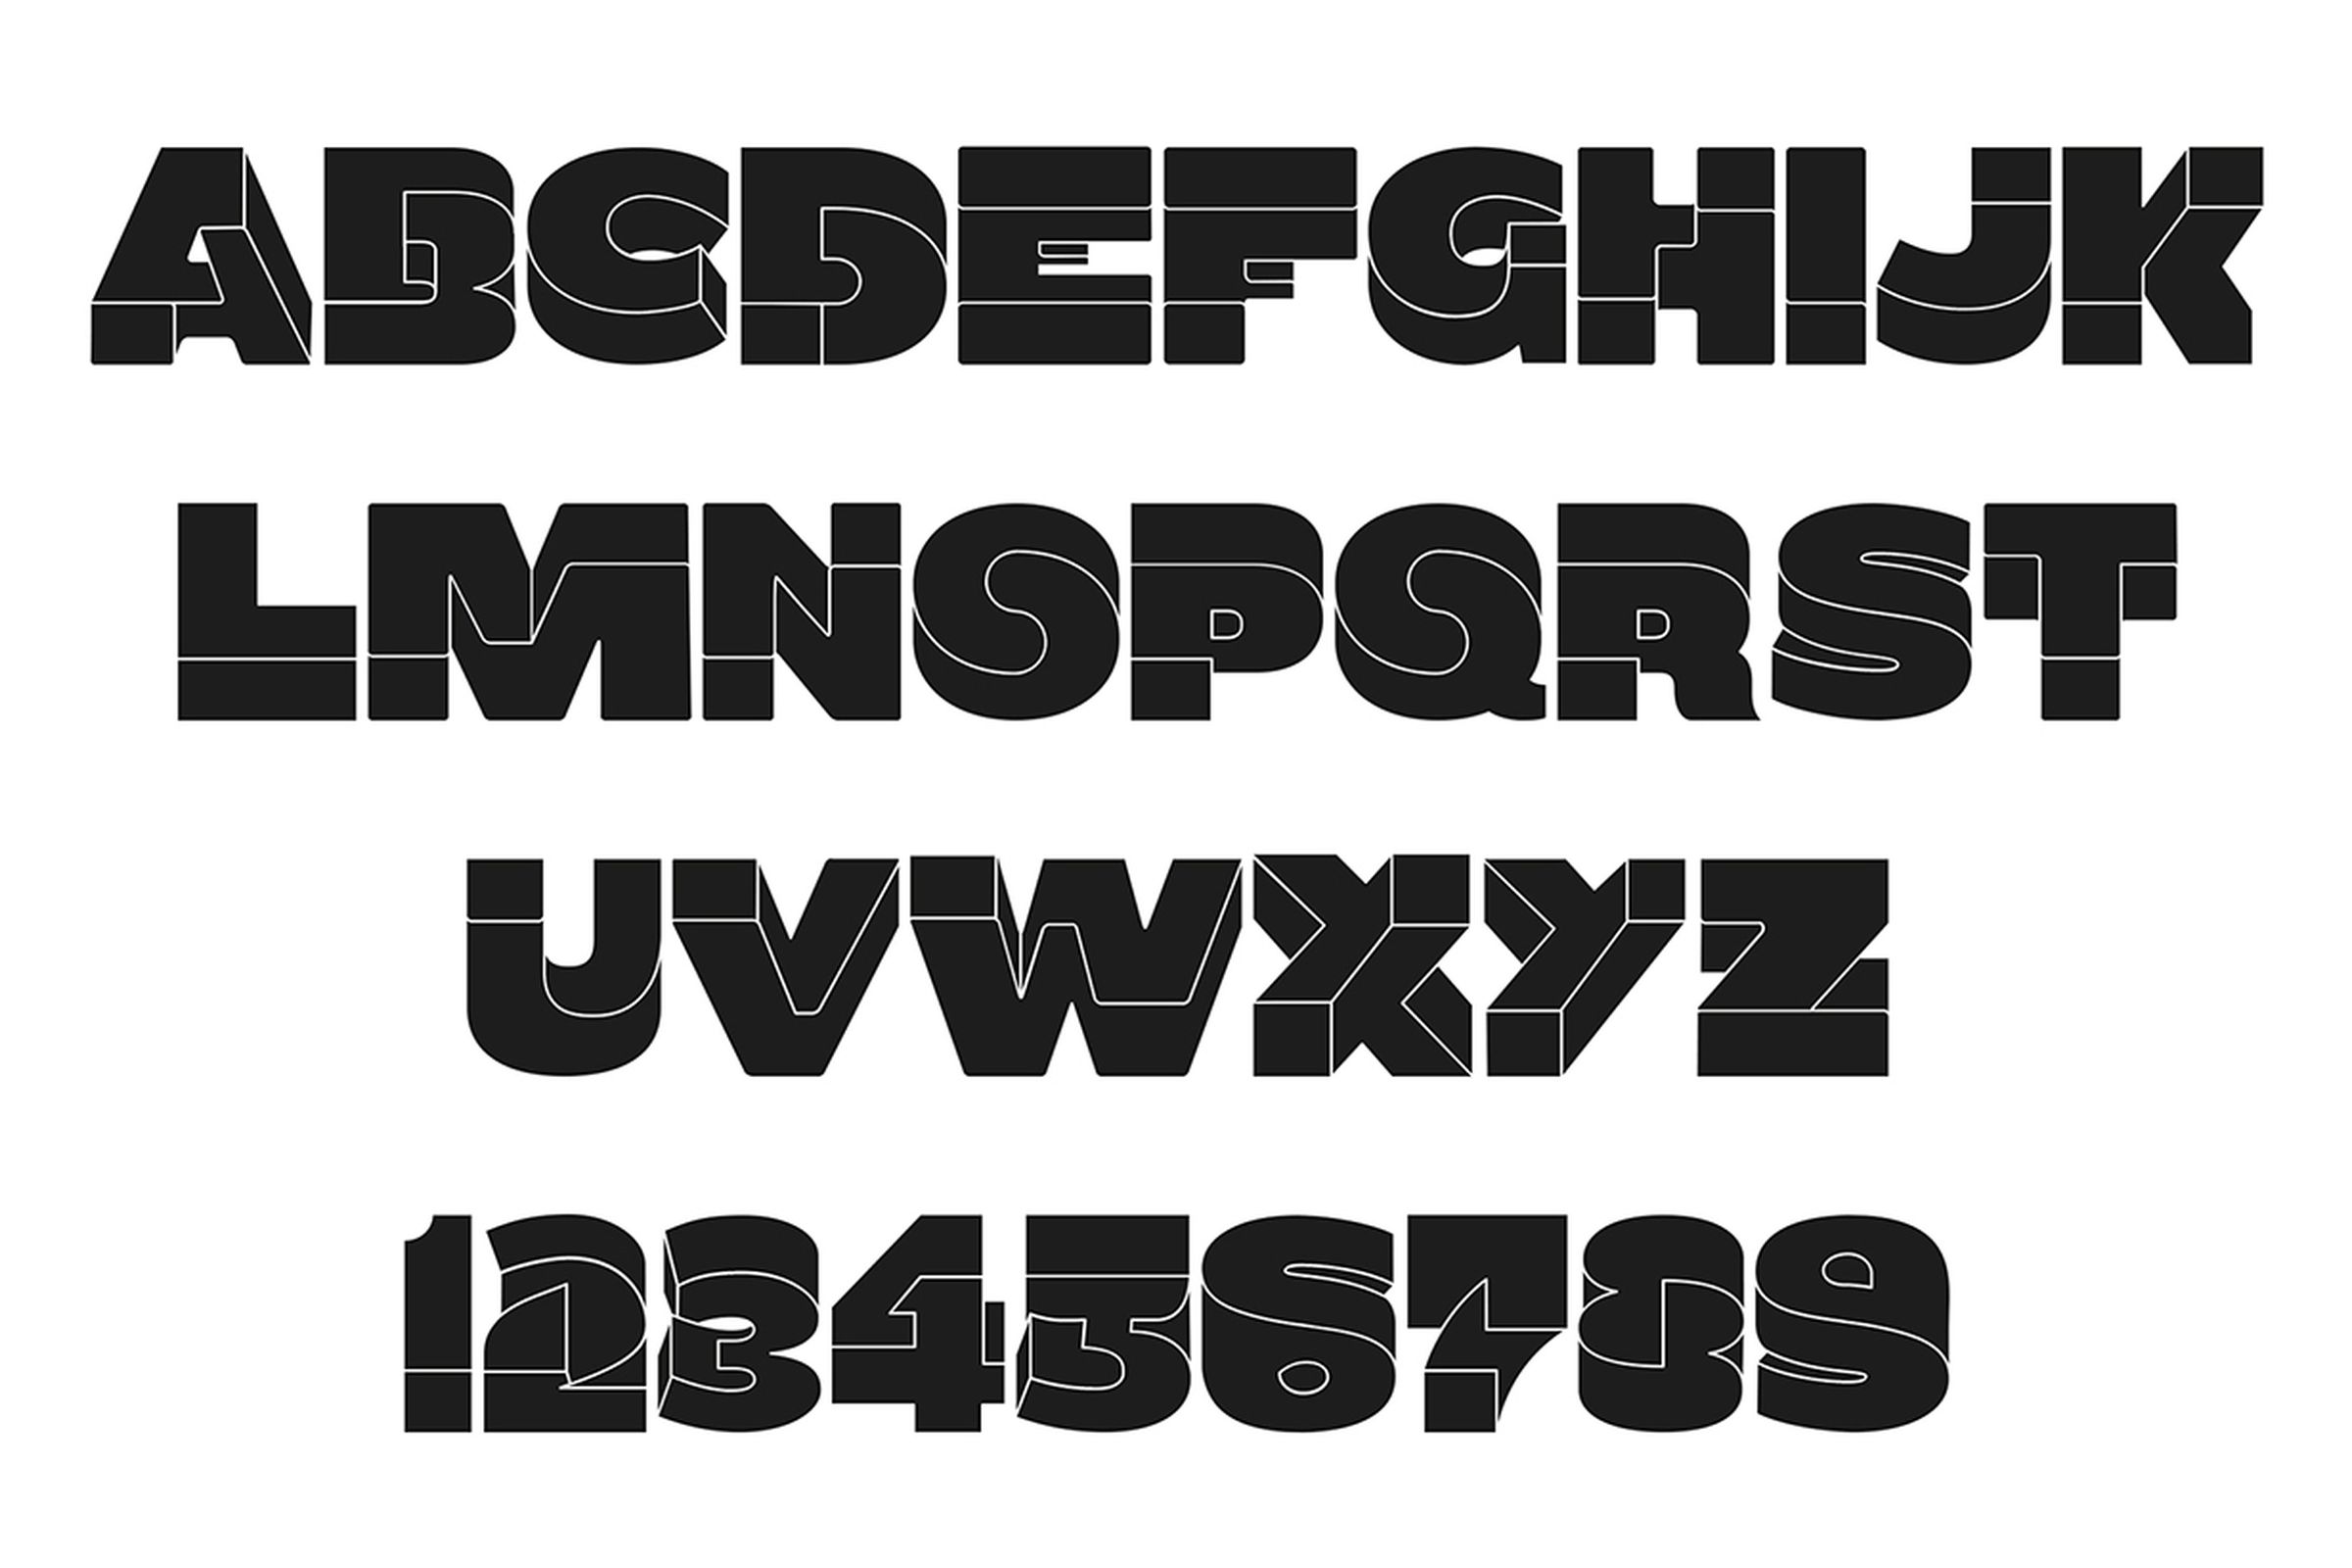 'Oxymora' a typeface by designer Birgit Palma